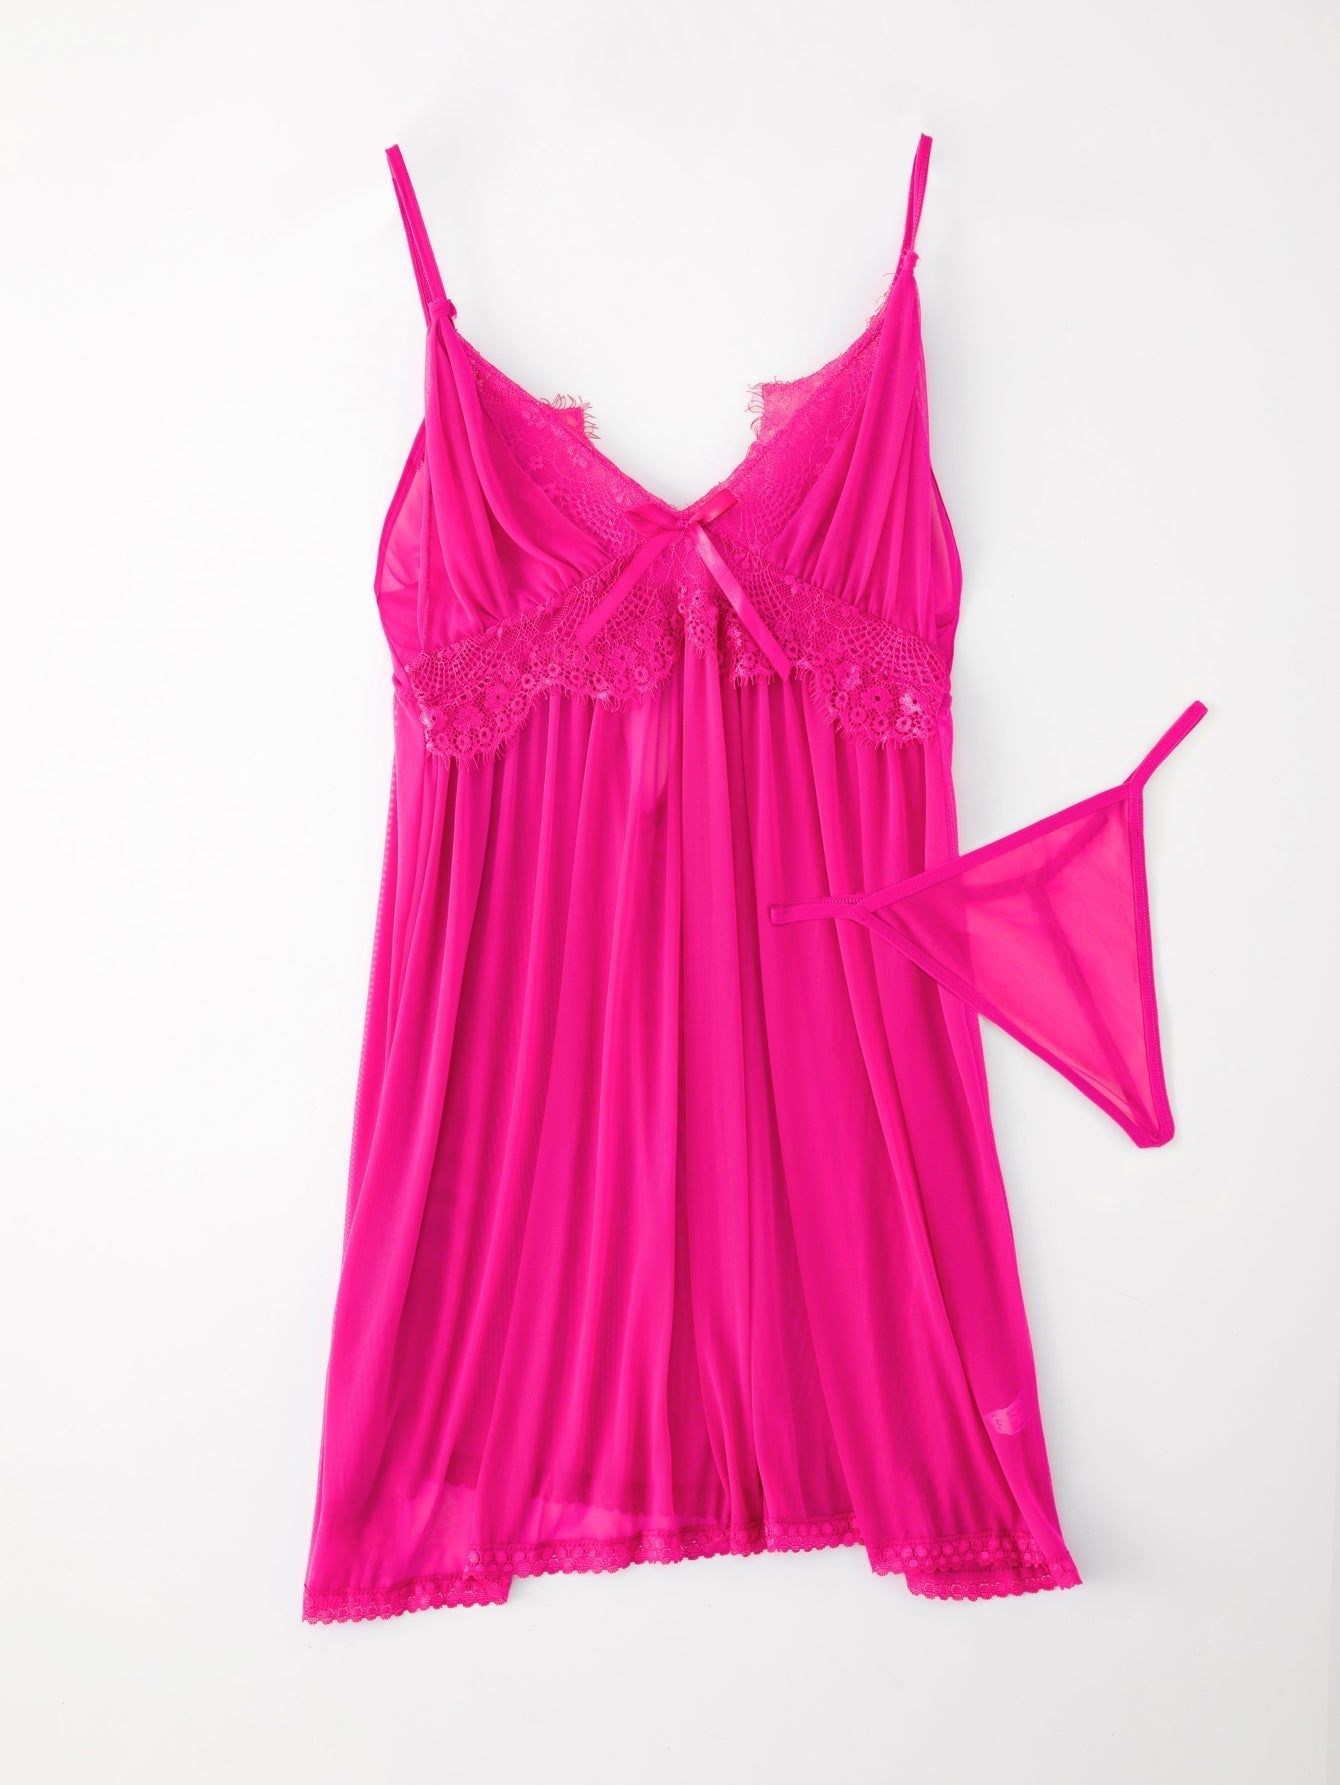 Sexy Lingerie for Women  Babydoll Lace V Neck Mesh Sleepwear Nightdress Pajamas Set with G-string Sai Feel